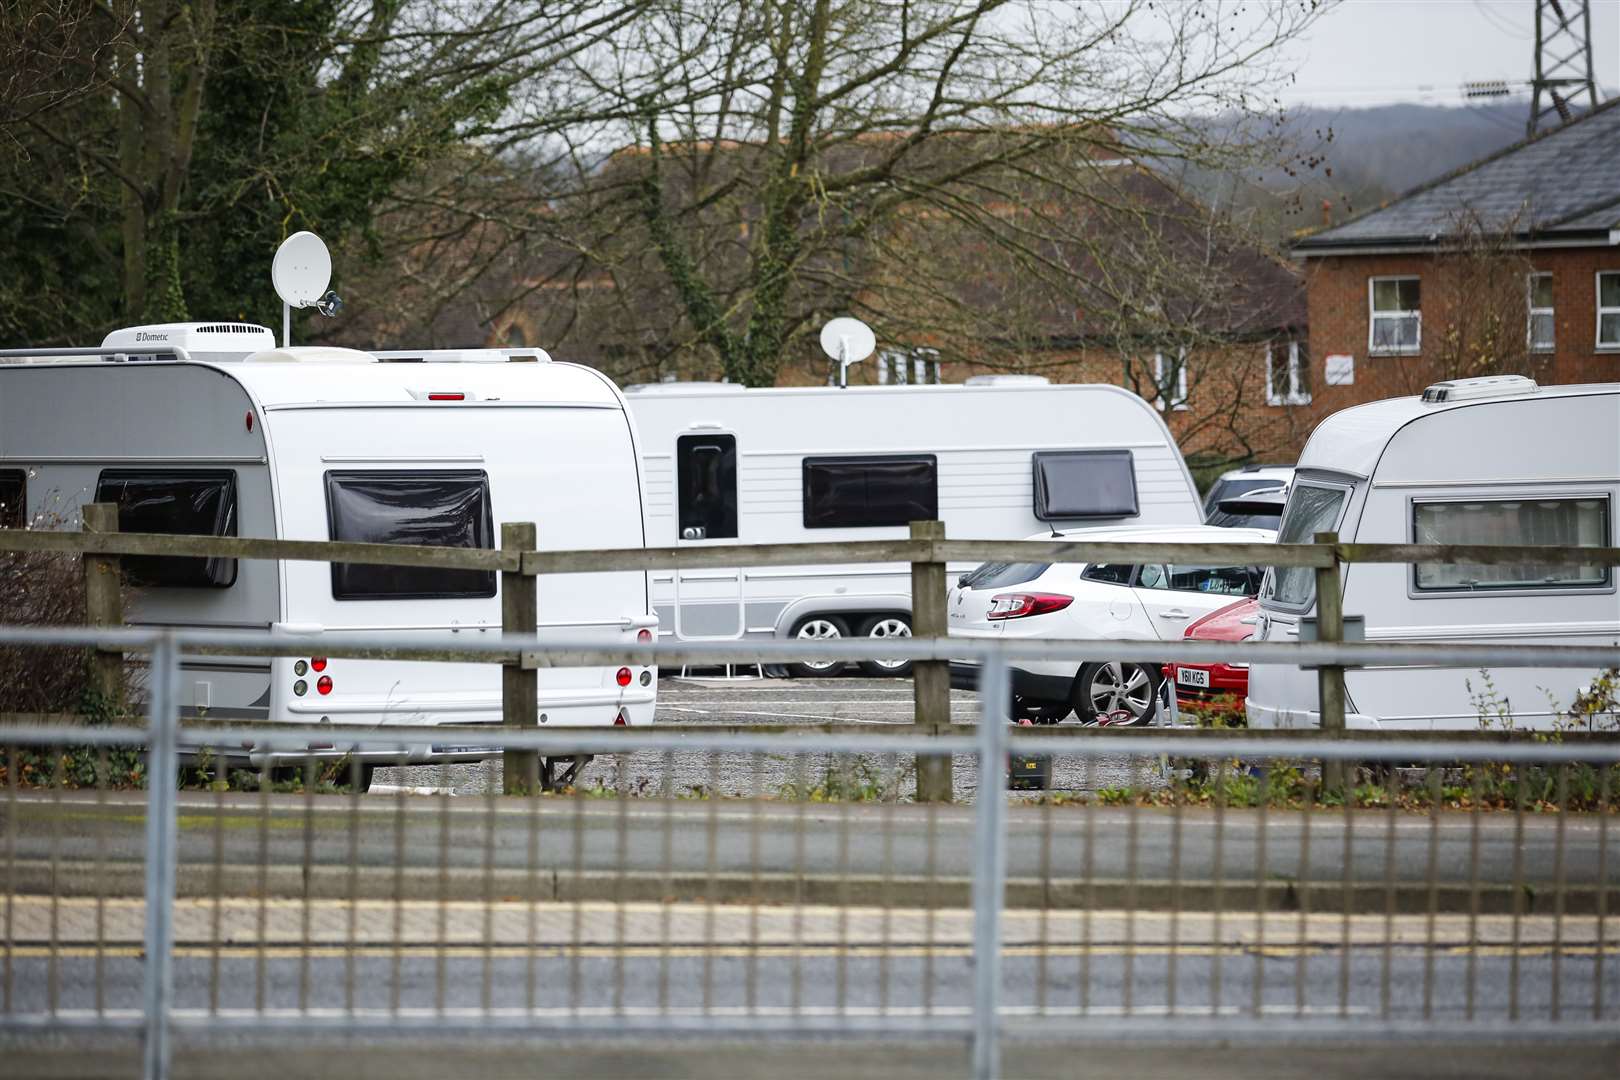 Caravans in the council-owned car park